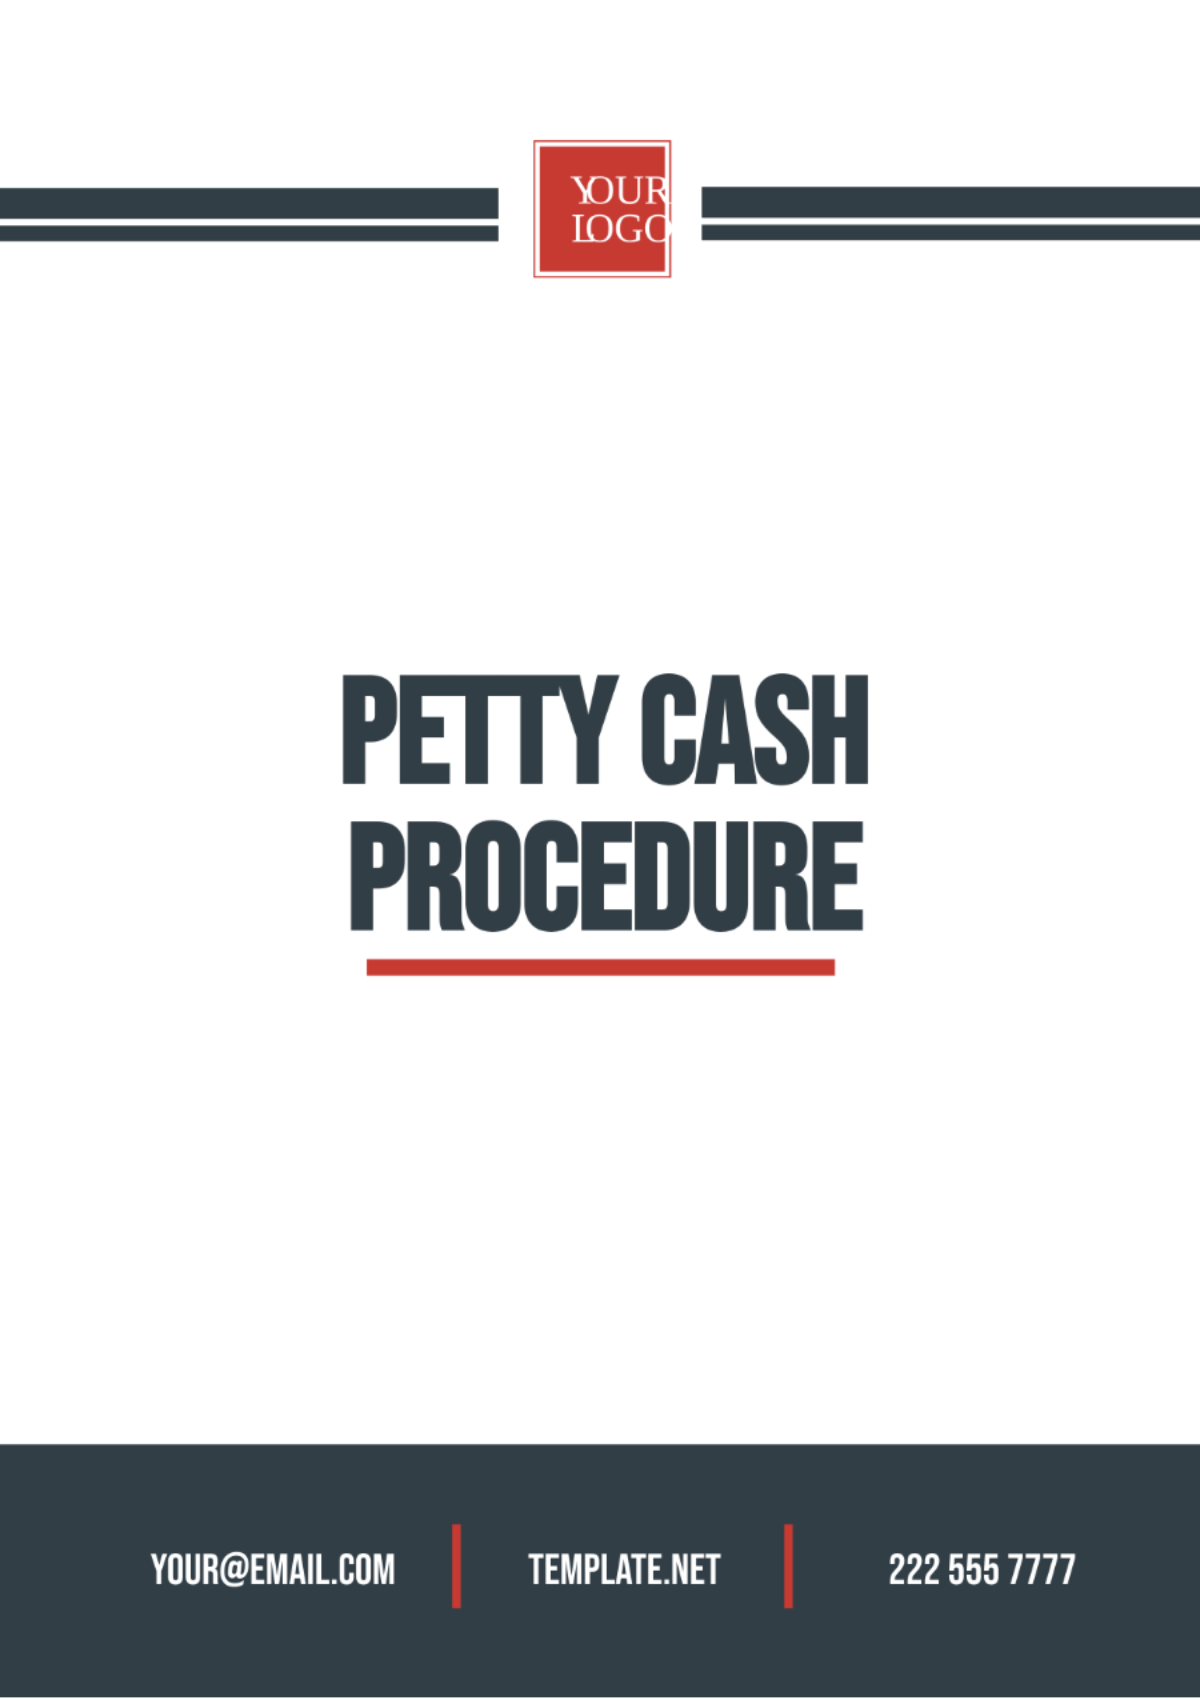 Free Petty Cash Procedure Template